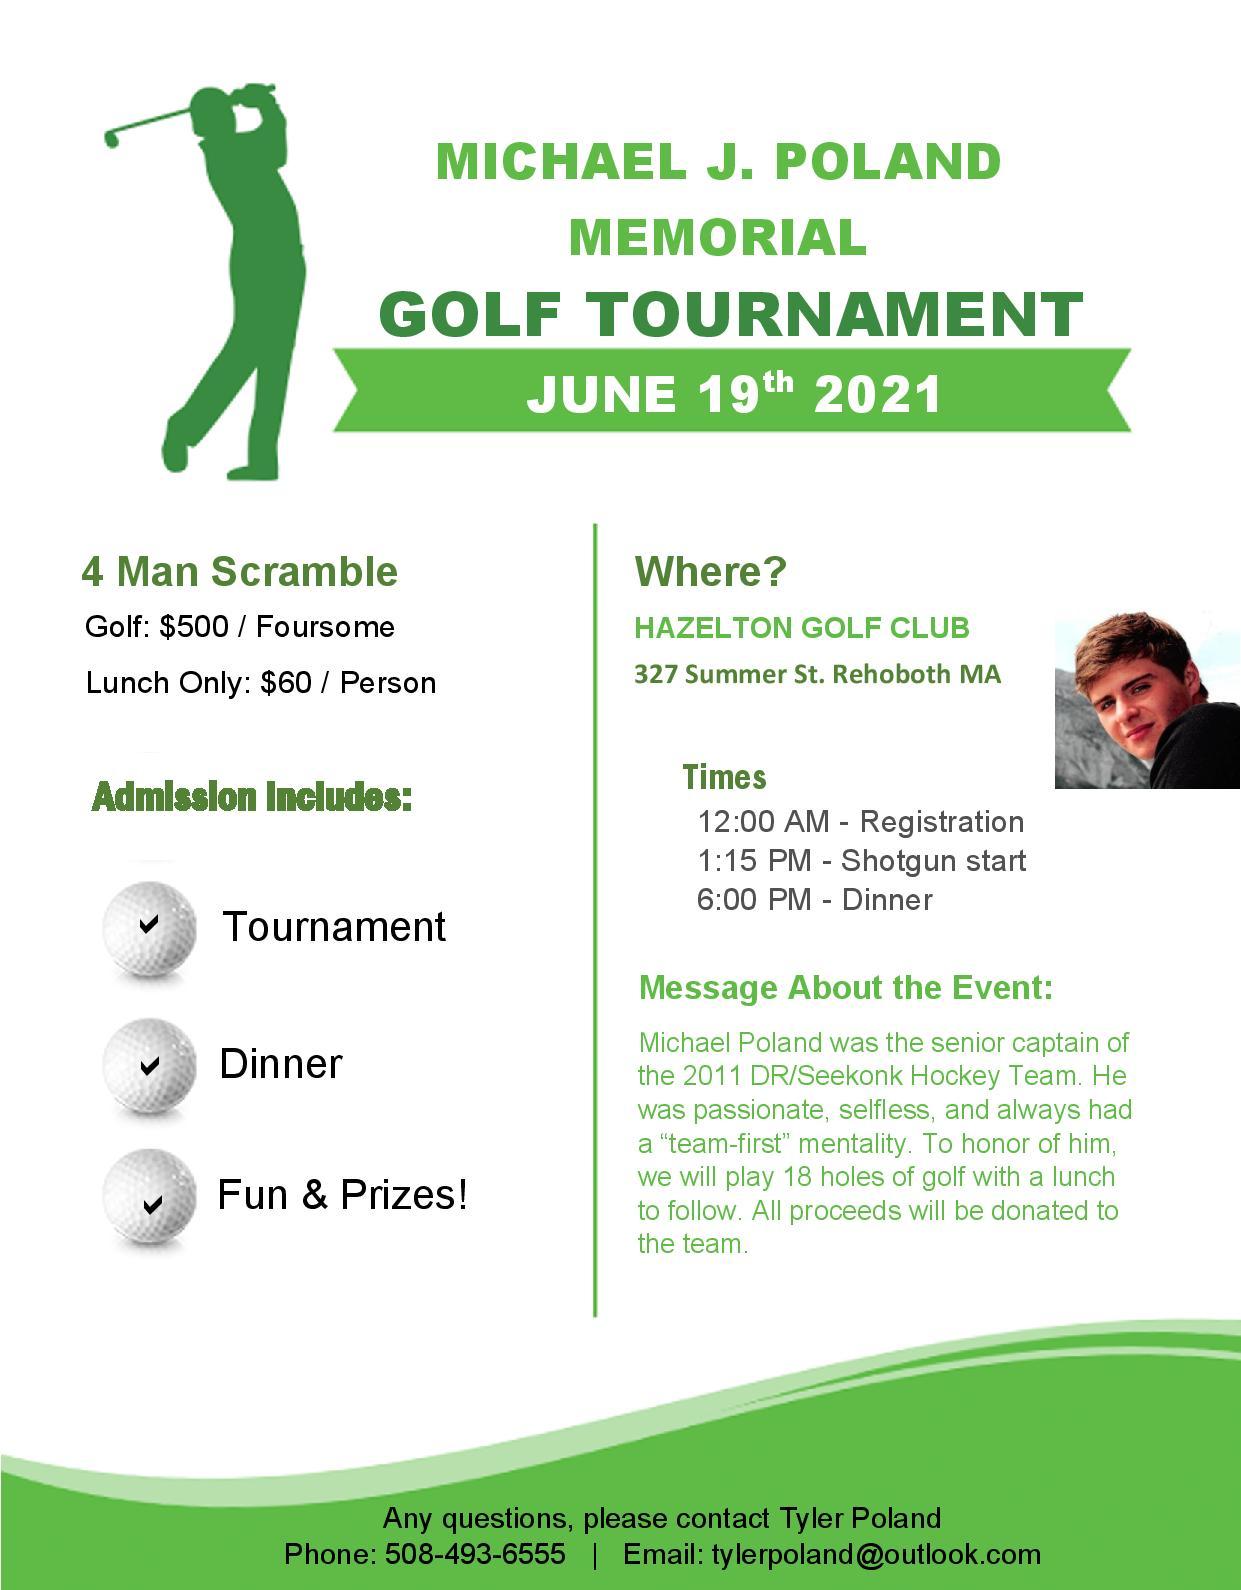 Michael J. Poland Memorial Golf Tournament